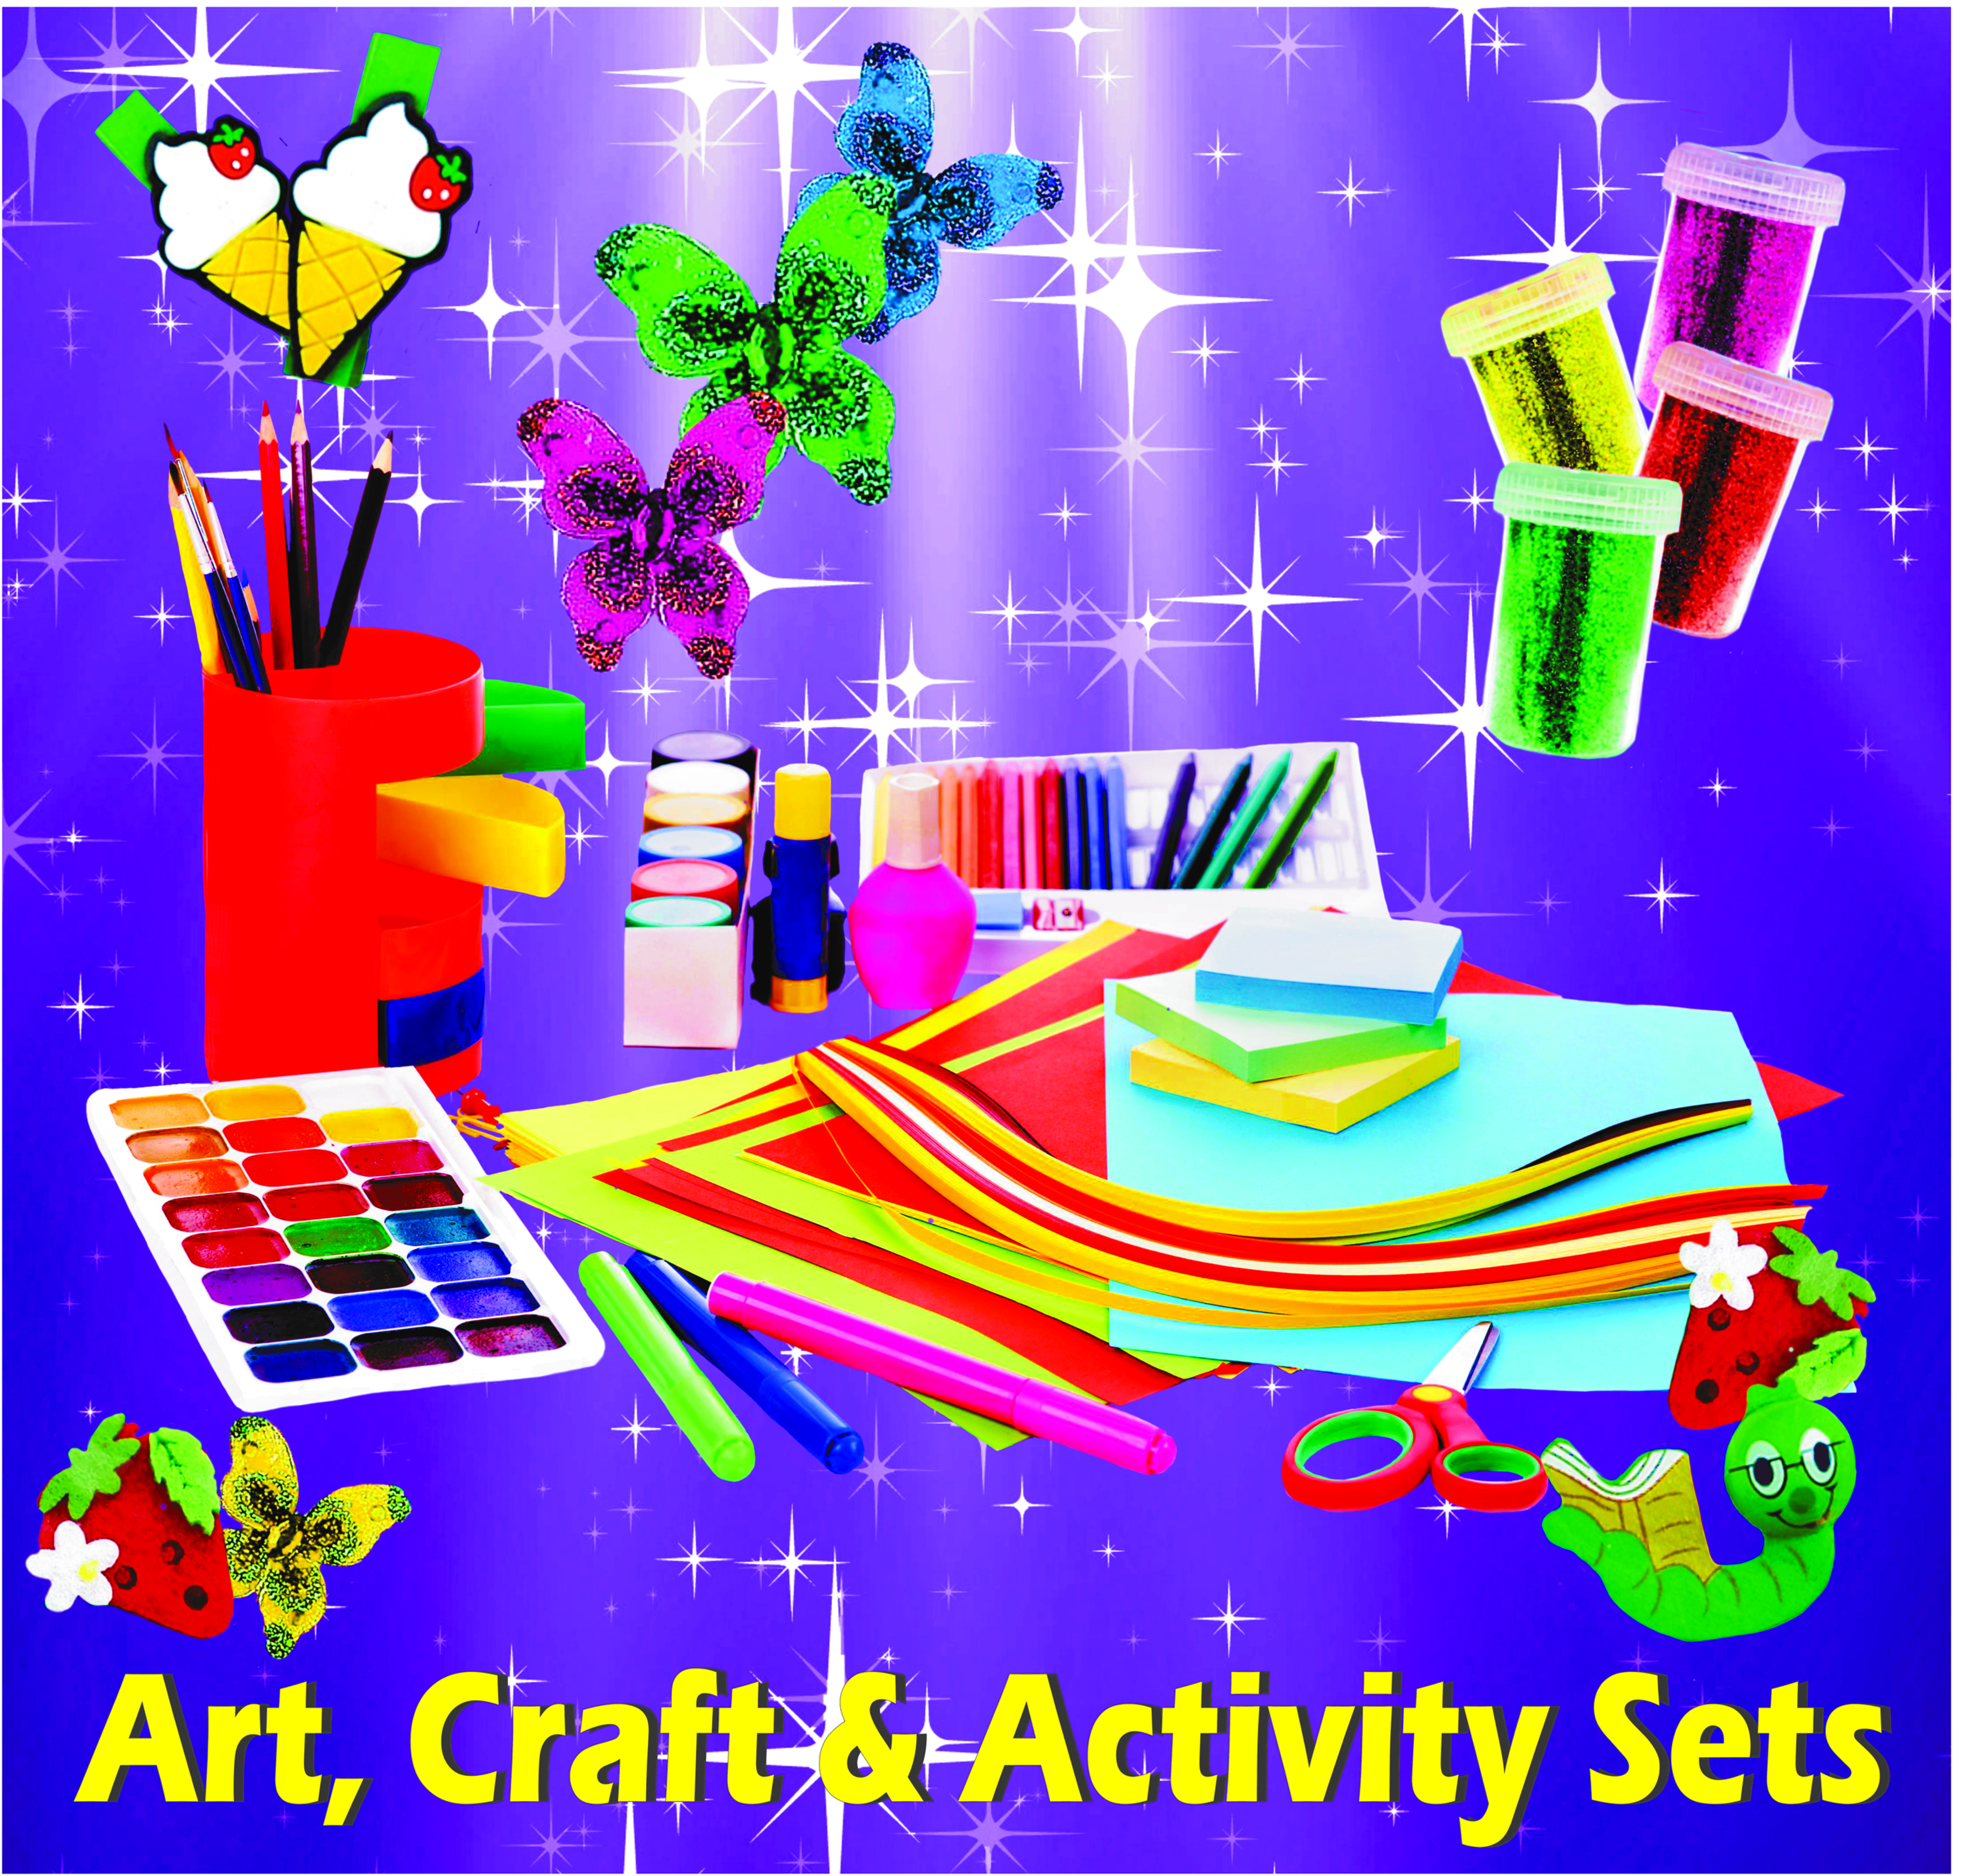 Art, Craft & Activity Sets